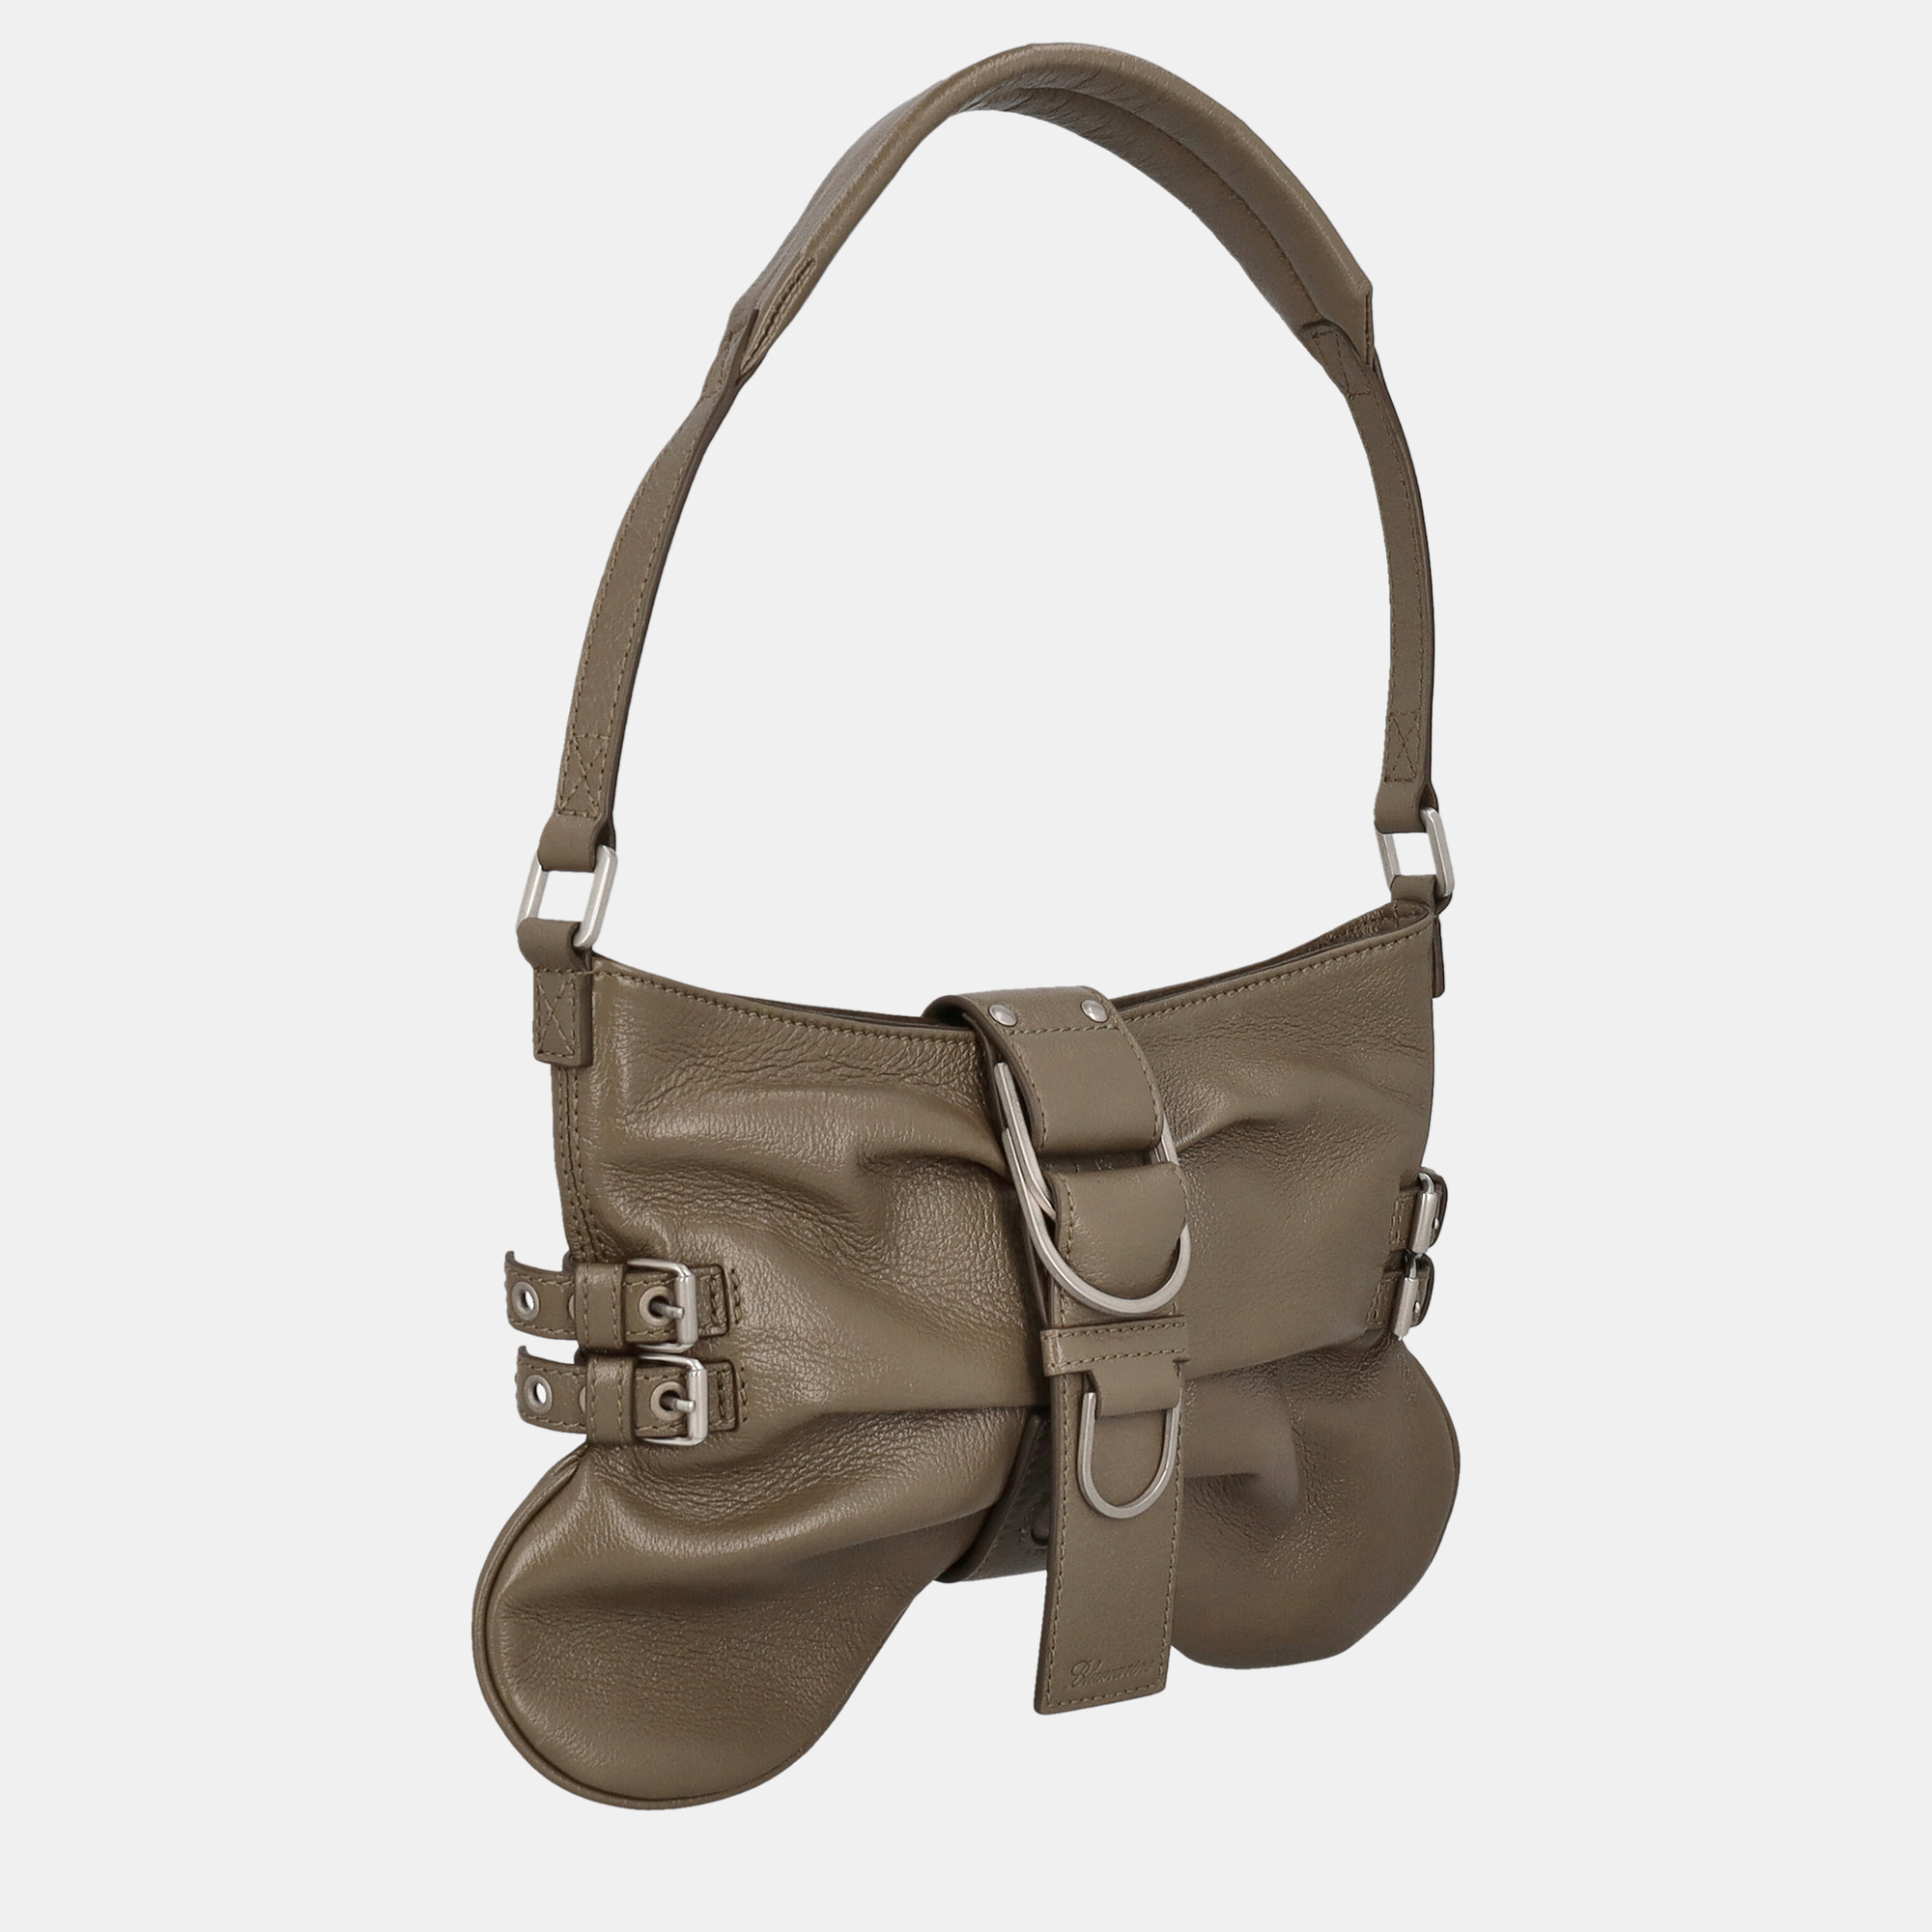 Blumarine  Women's Leather Hobo Bag - Green - One Size